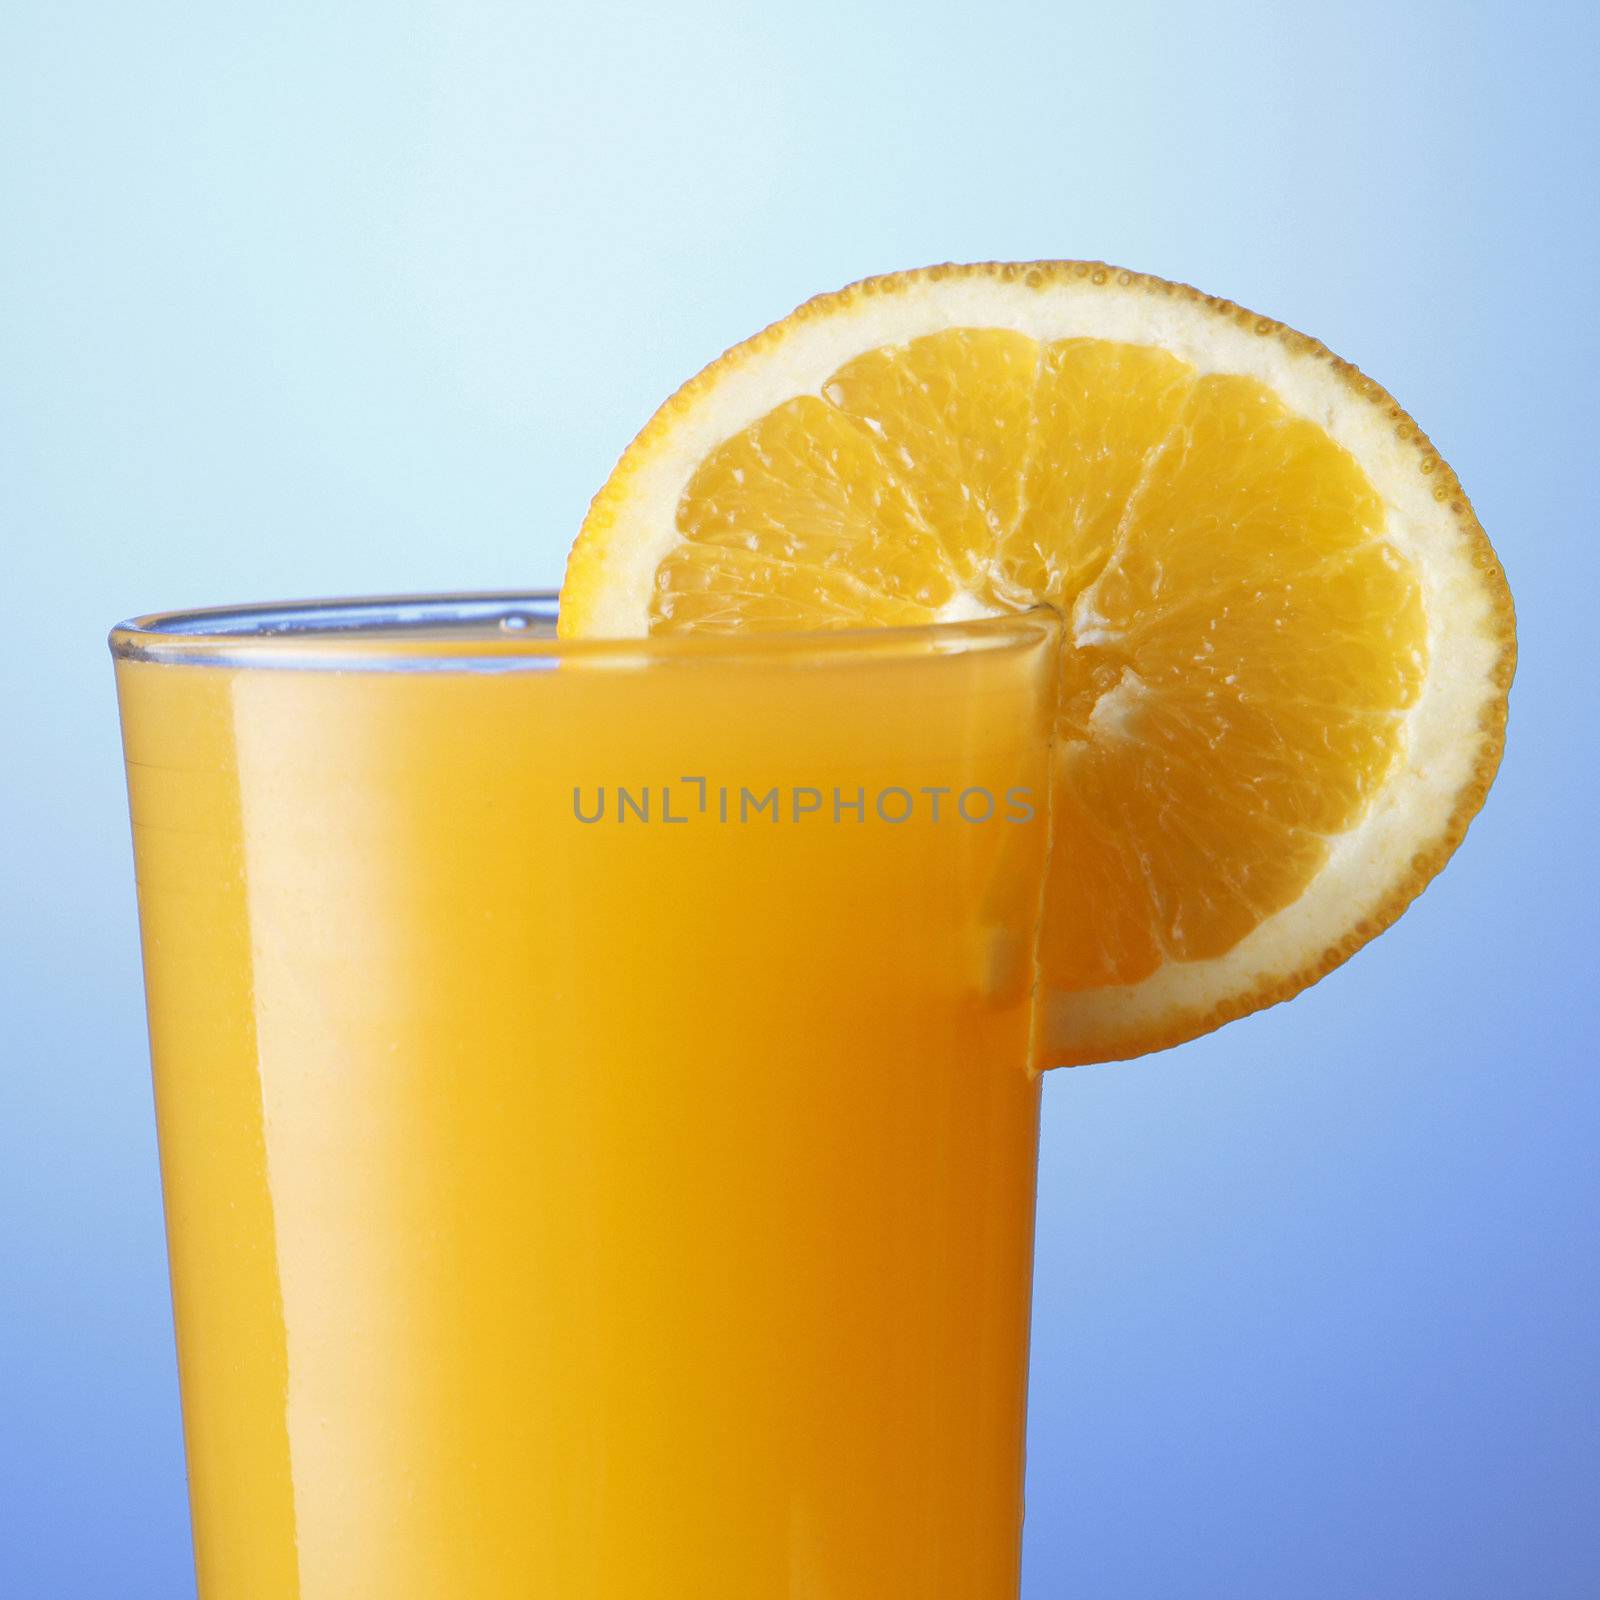 stock image of the orange juice